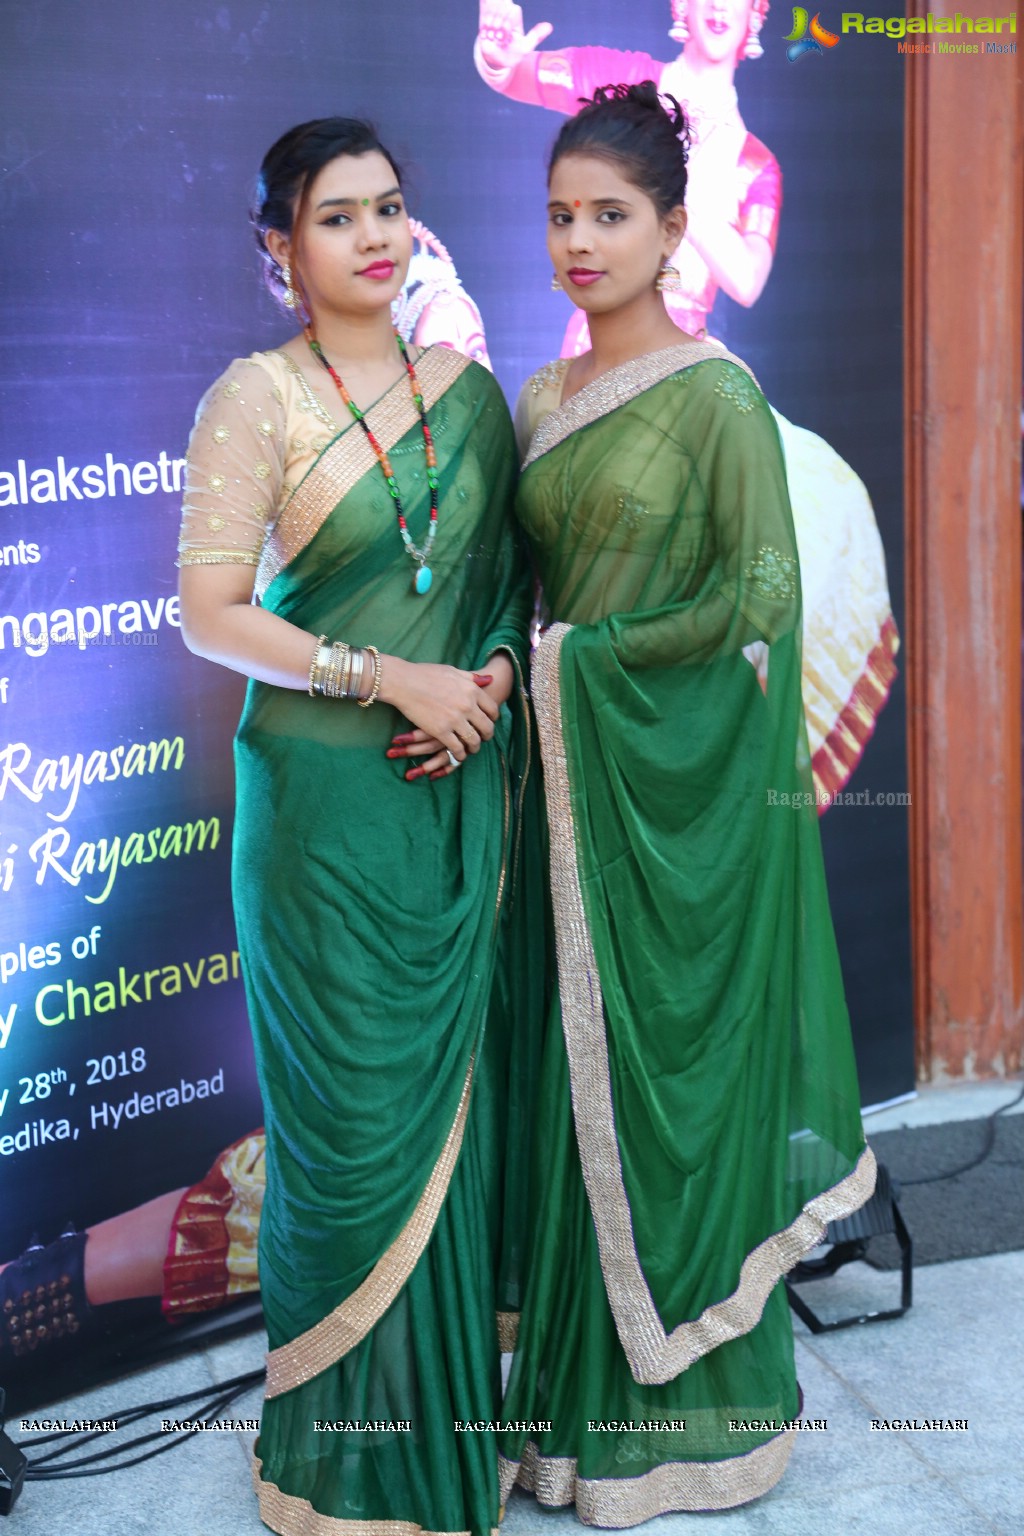 Kuchipudi Rangapravesam by Keerthi and Sruthi at Shilpa Kala Vedika, Hyderabad